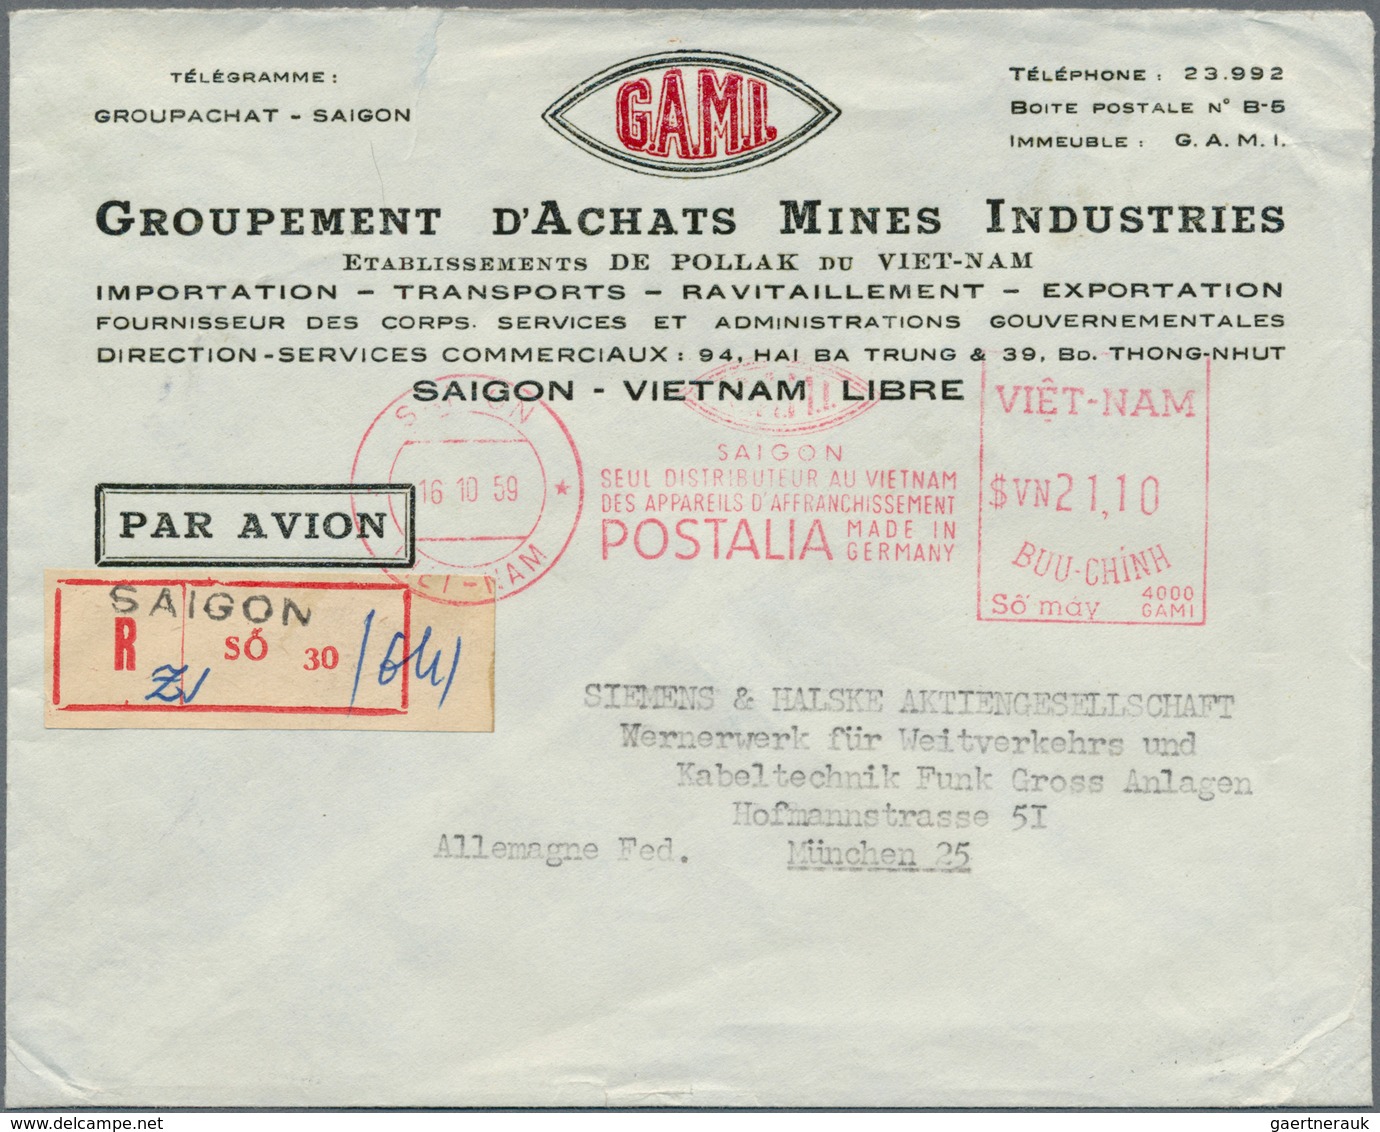 Vietnam-Süd (1951-1975): 1959, Meter By Postalia $VN21,10 From "SAIGON 16 10 59" To Registered Cover - Vietnam